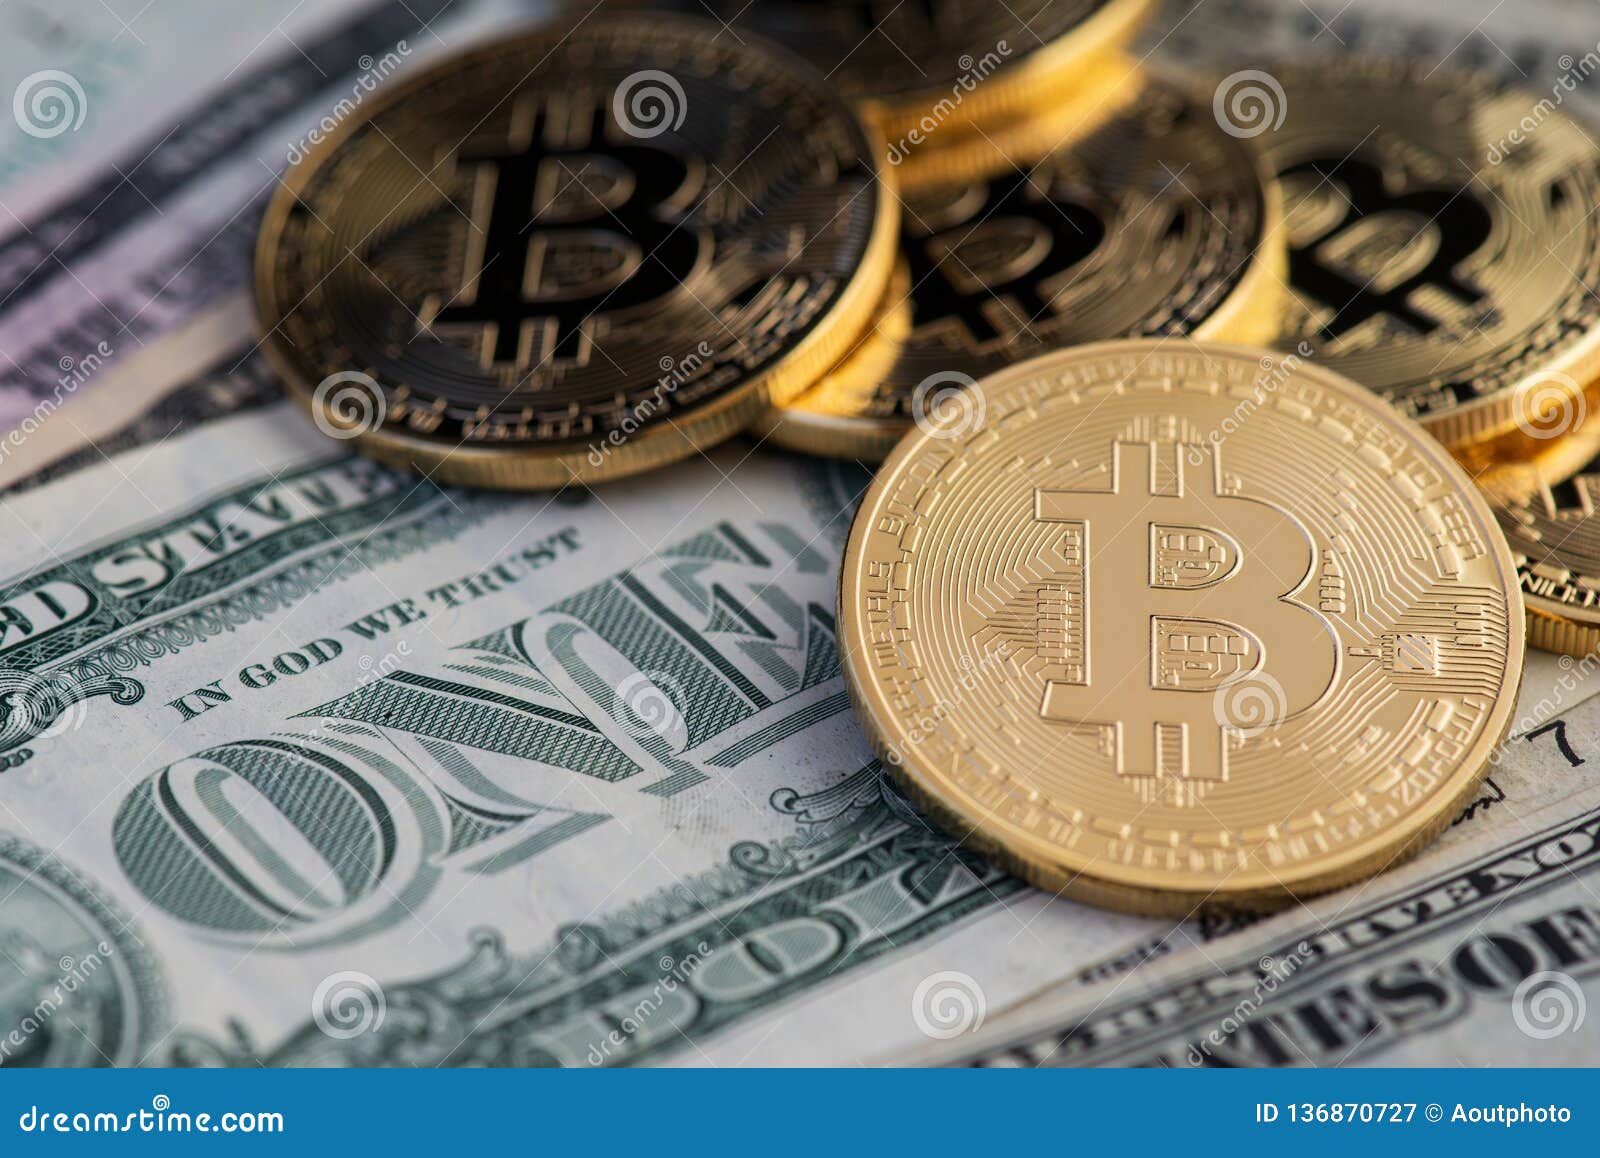 1 bitcoin to a us dollar